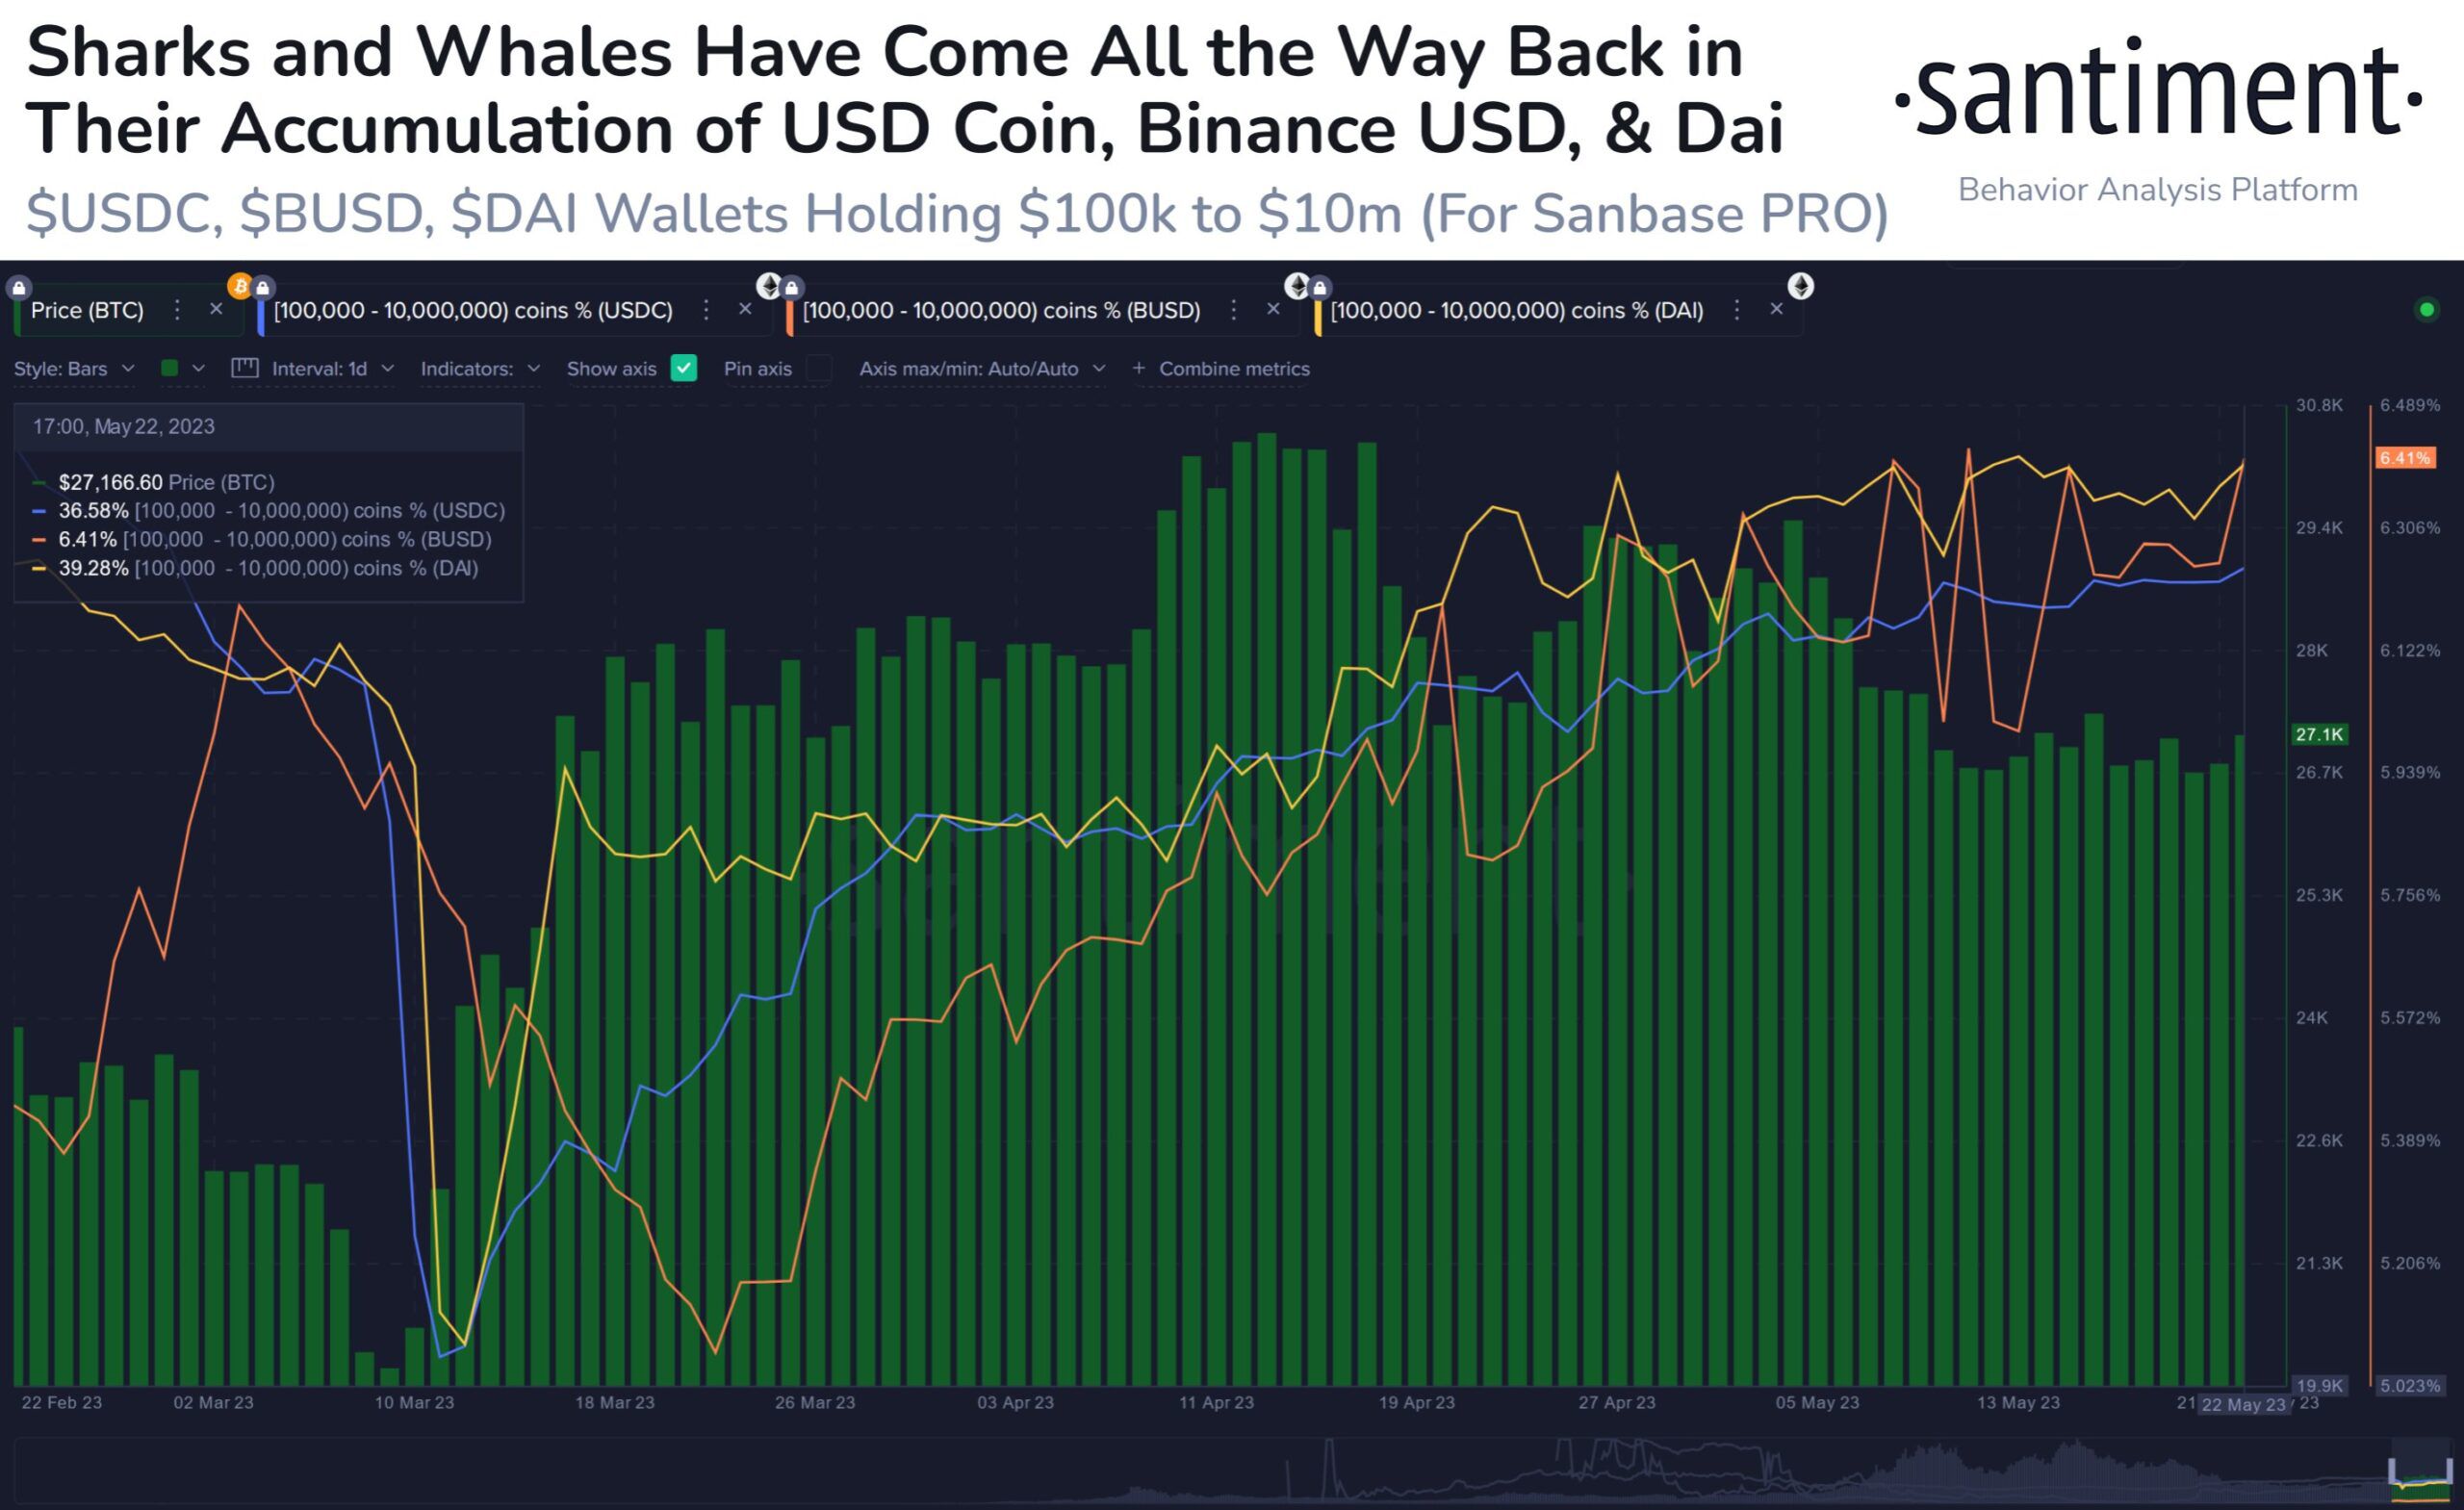 Las ballenas vuelven a las monedas estables - Santiment